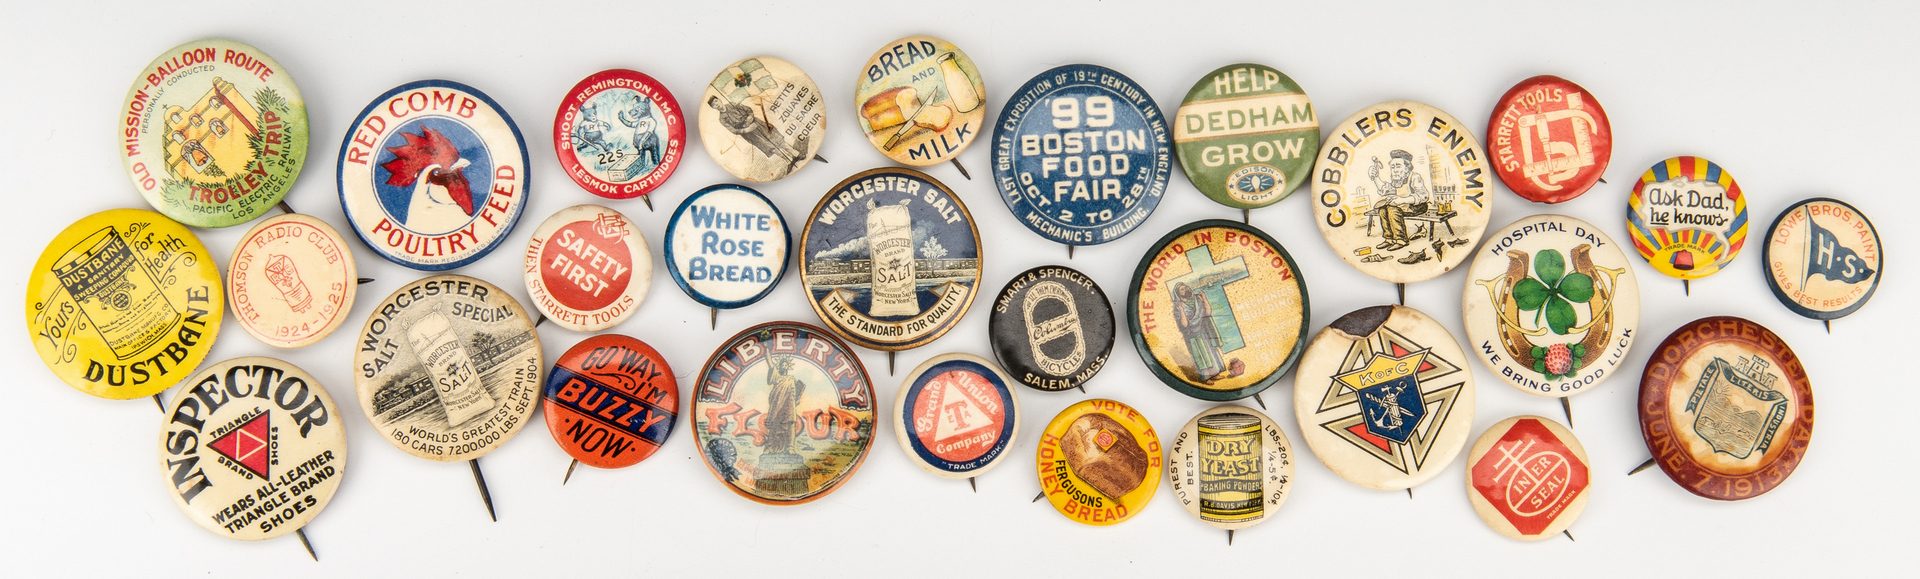 Lot 765: 46 Early Pinback Buttons, incl. Beer, Baseball, Firemen